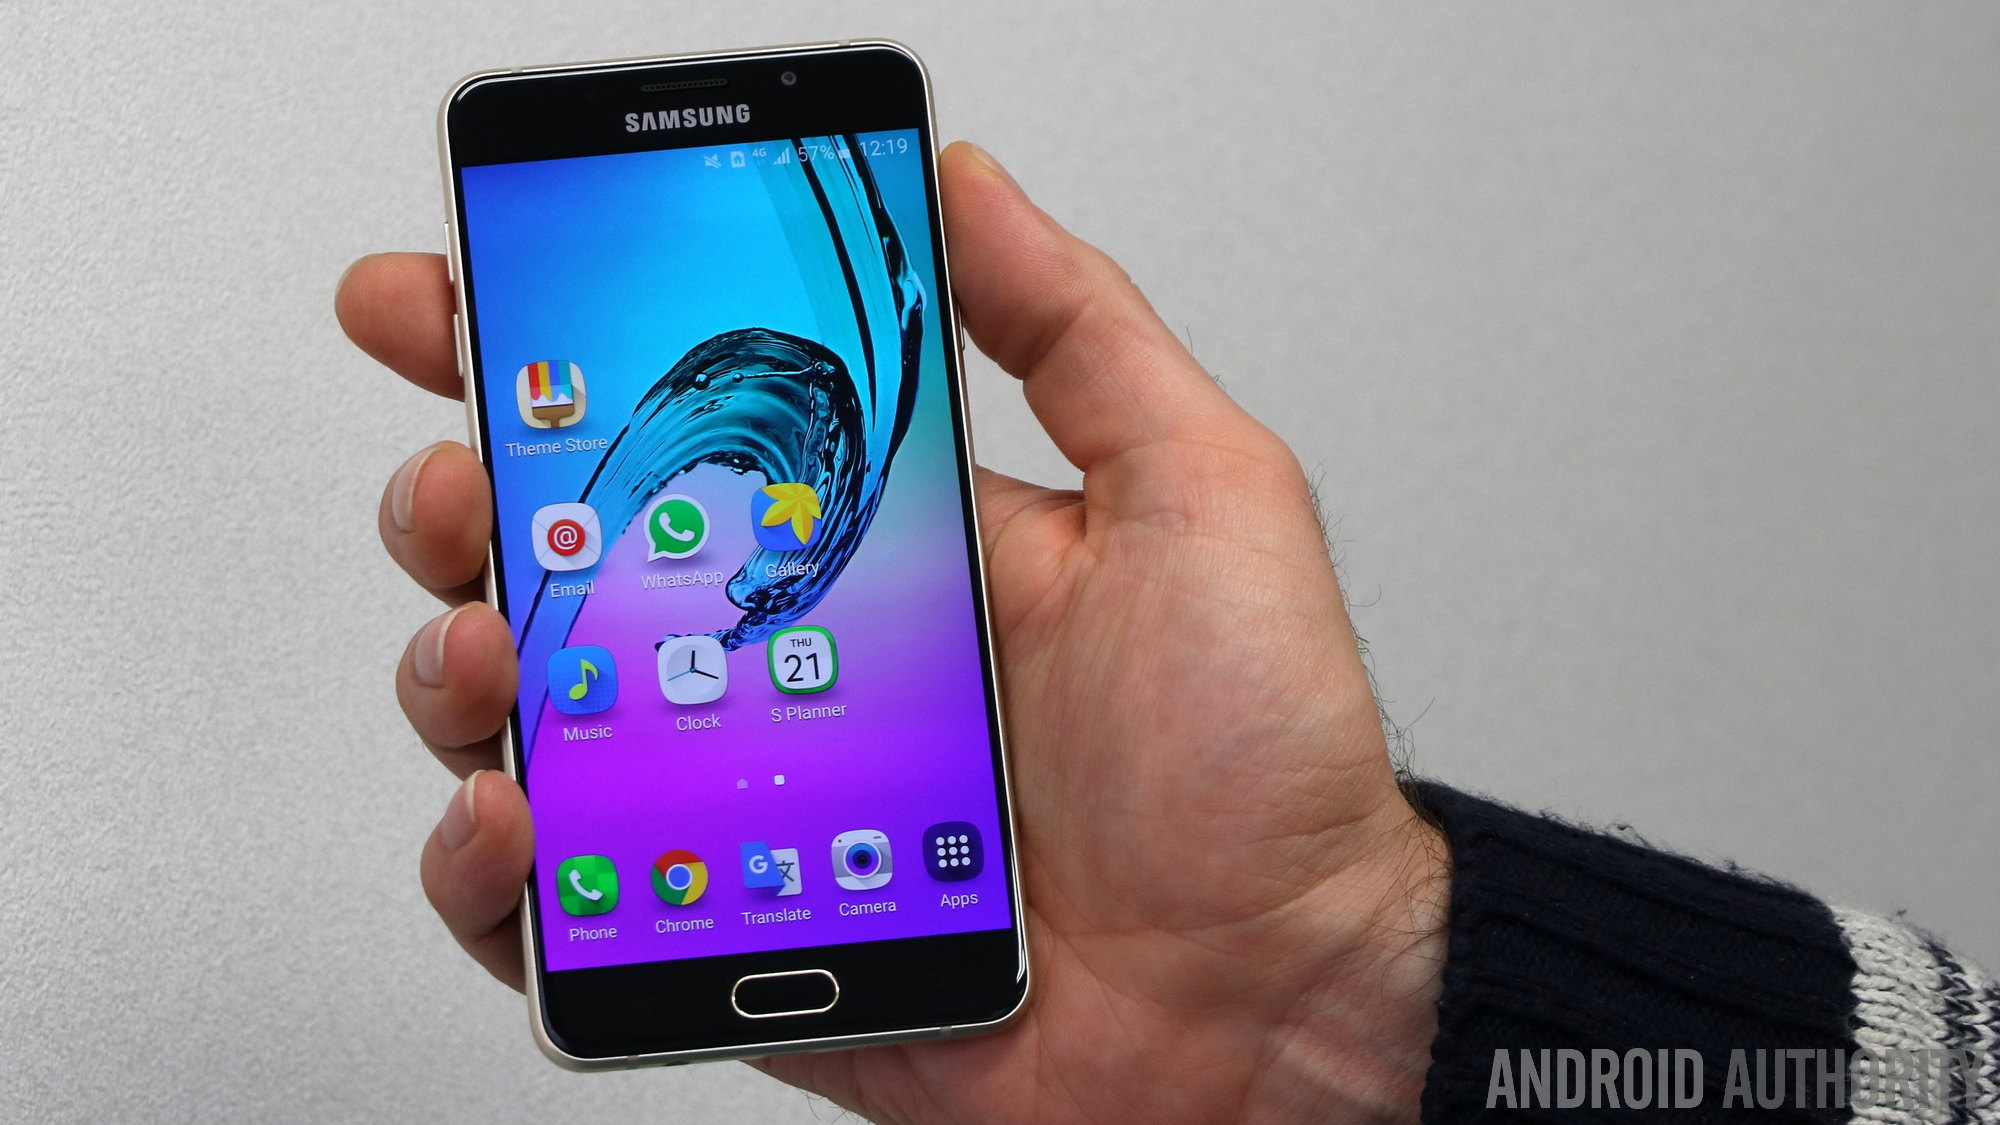 Samsung Galaxy A7 Sm A750fn